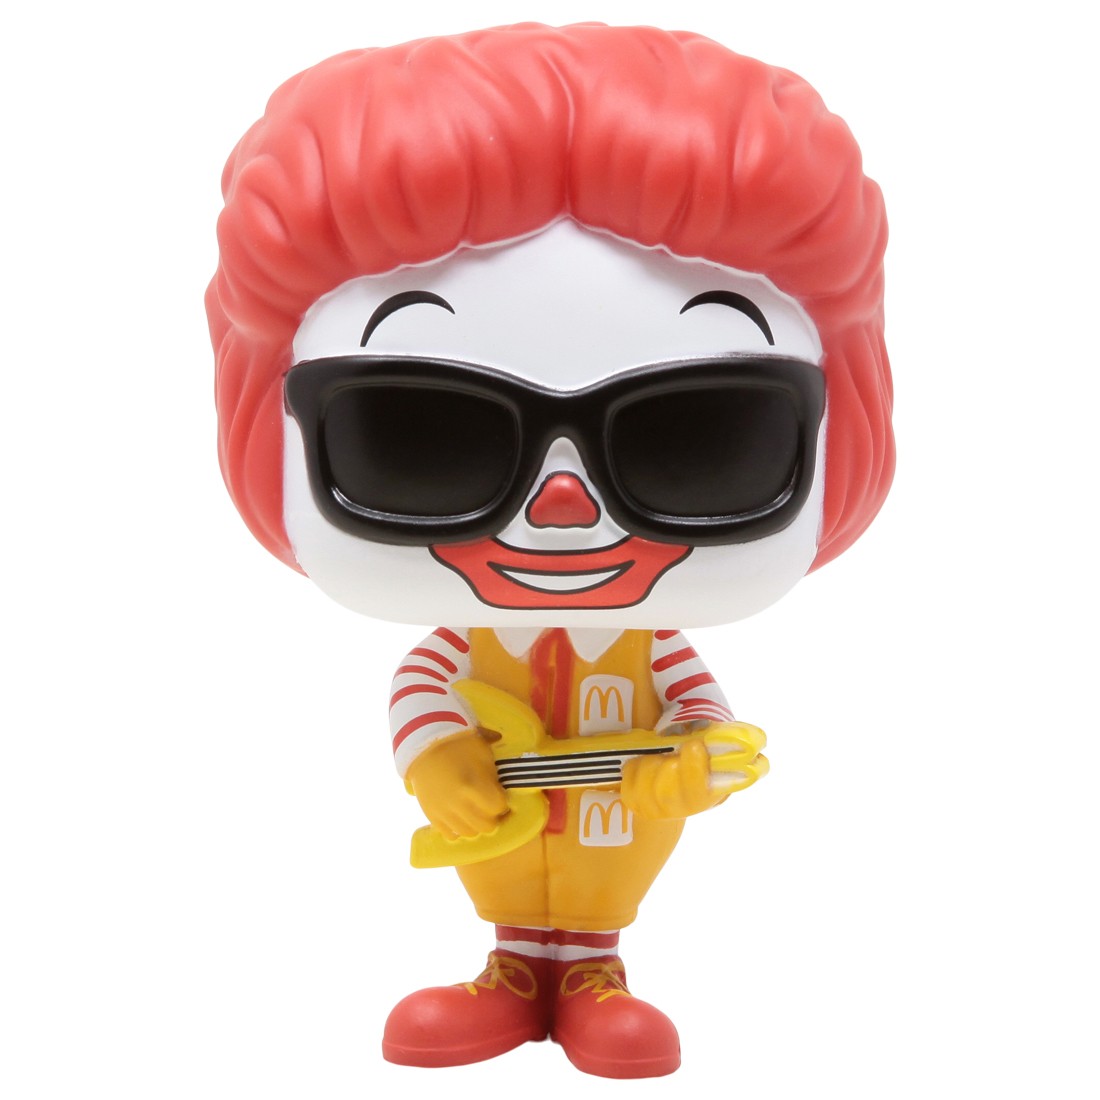 Funko POP Ad Icons McDonald's - Rock Out Ronald McDonald (red)